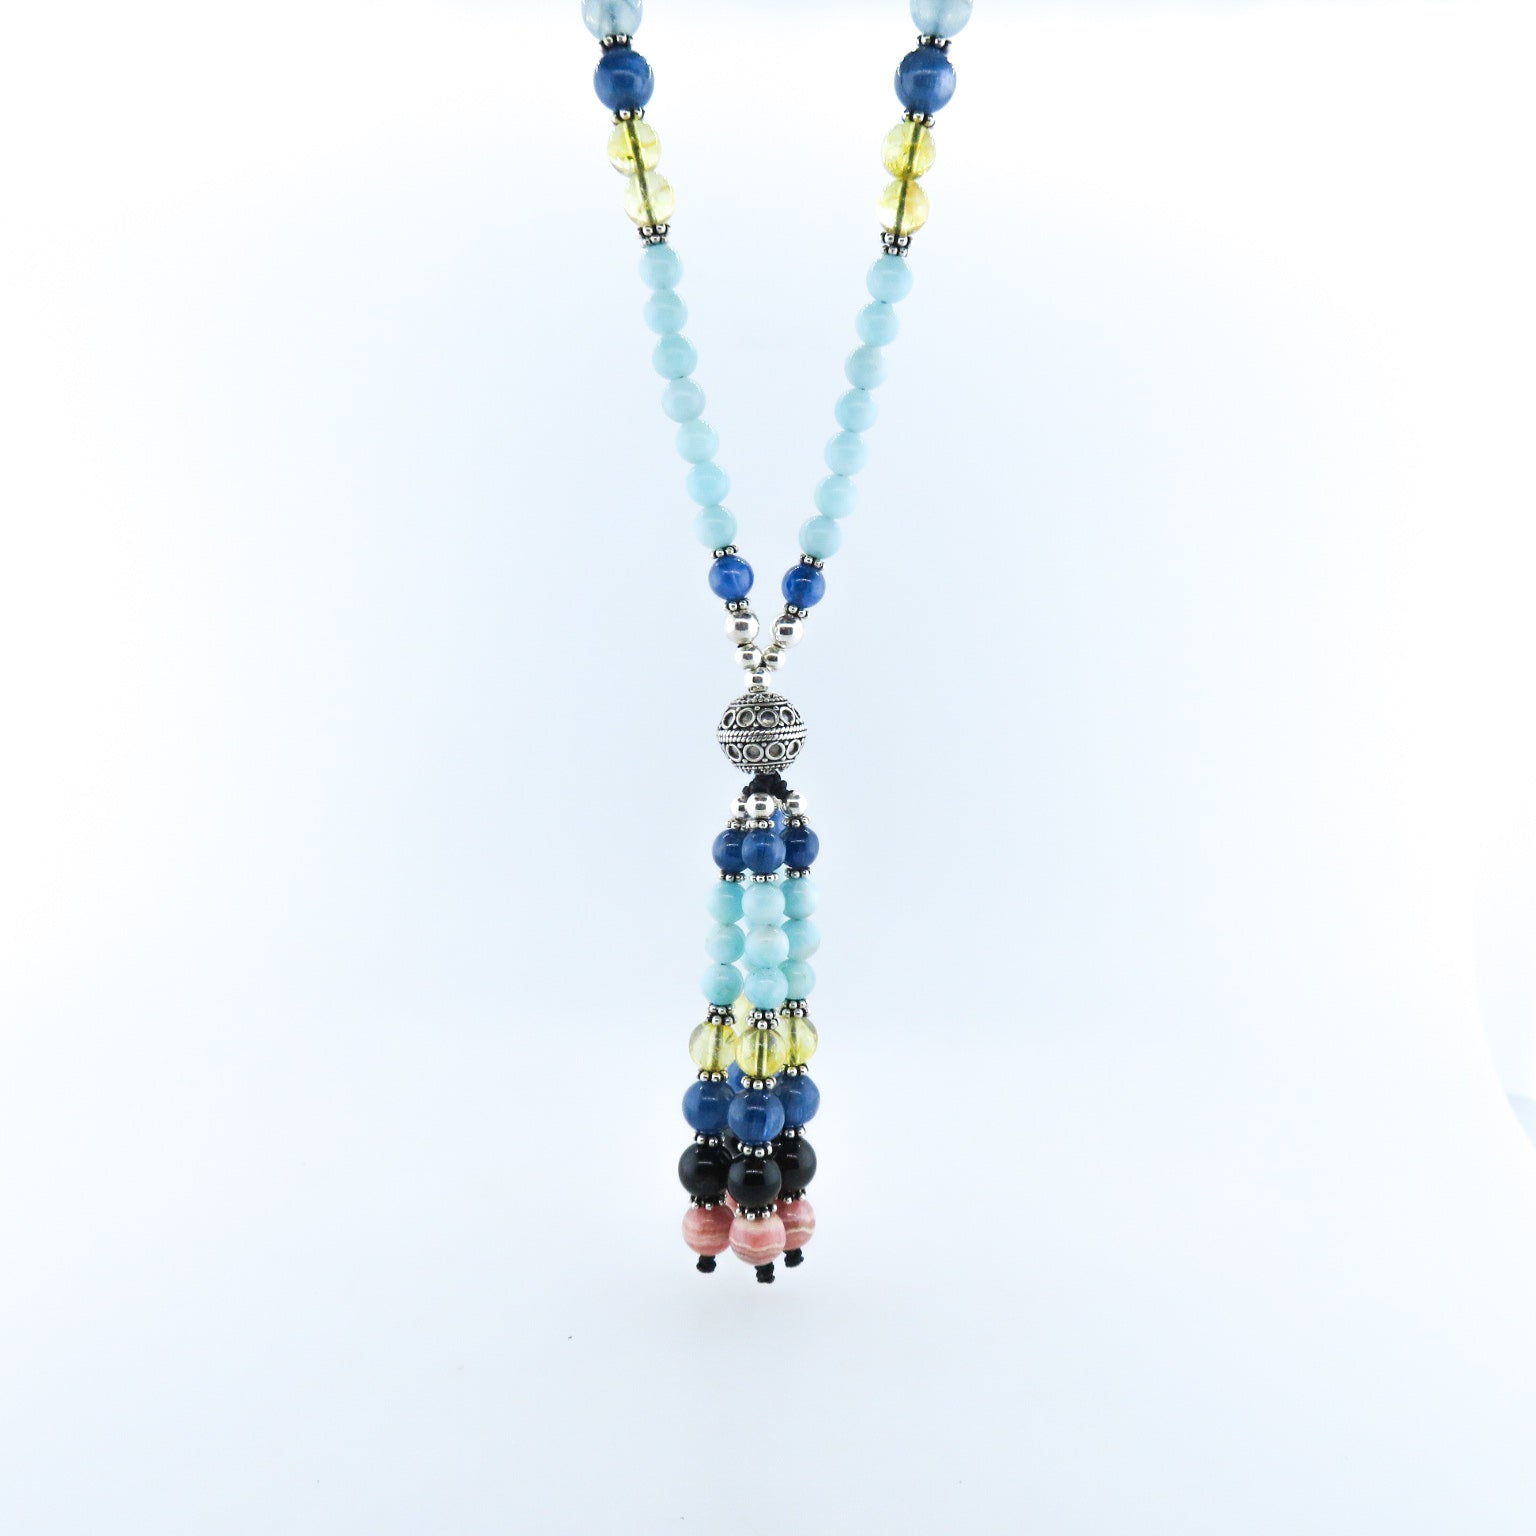 Amazonite Beads Necklace with Citrine, Aquamarine, Rhodochrosite, Tourmaline, Kyanite and Silver Beads